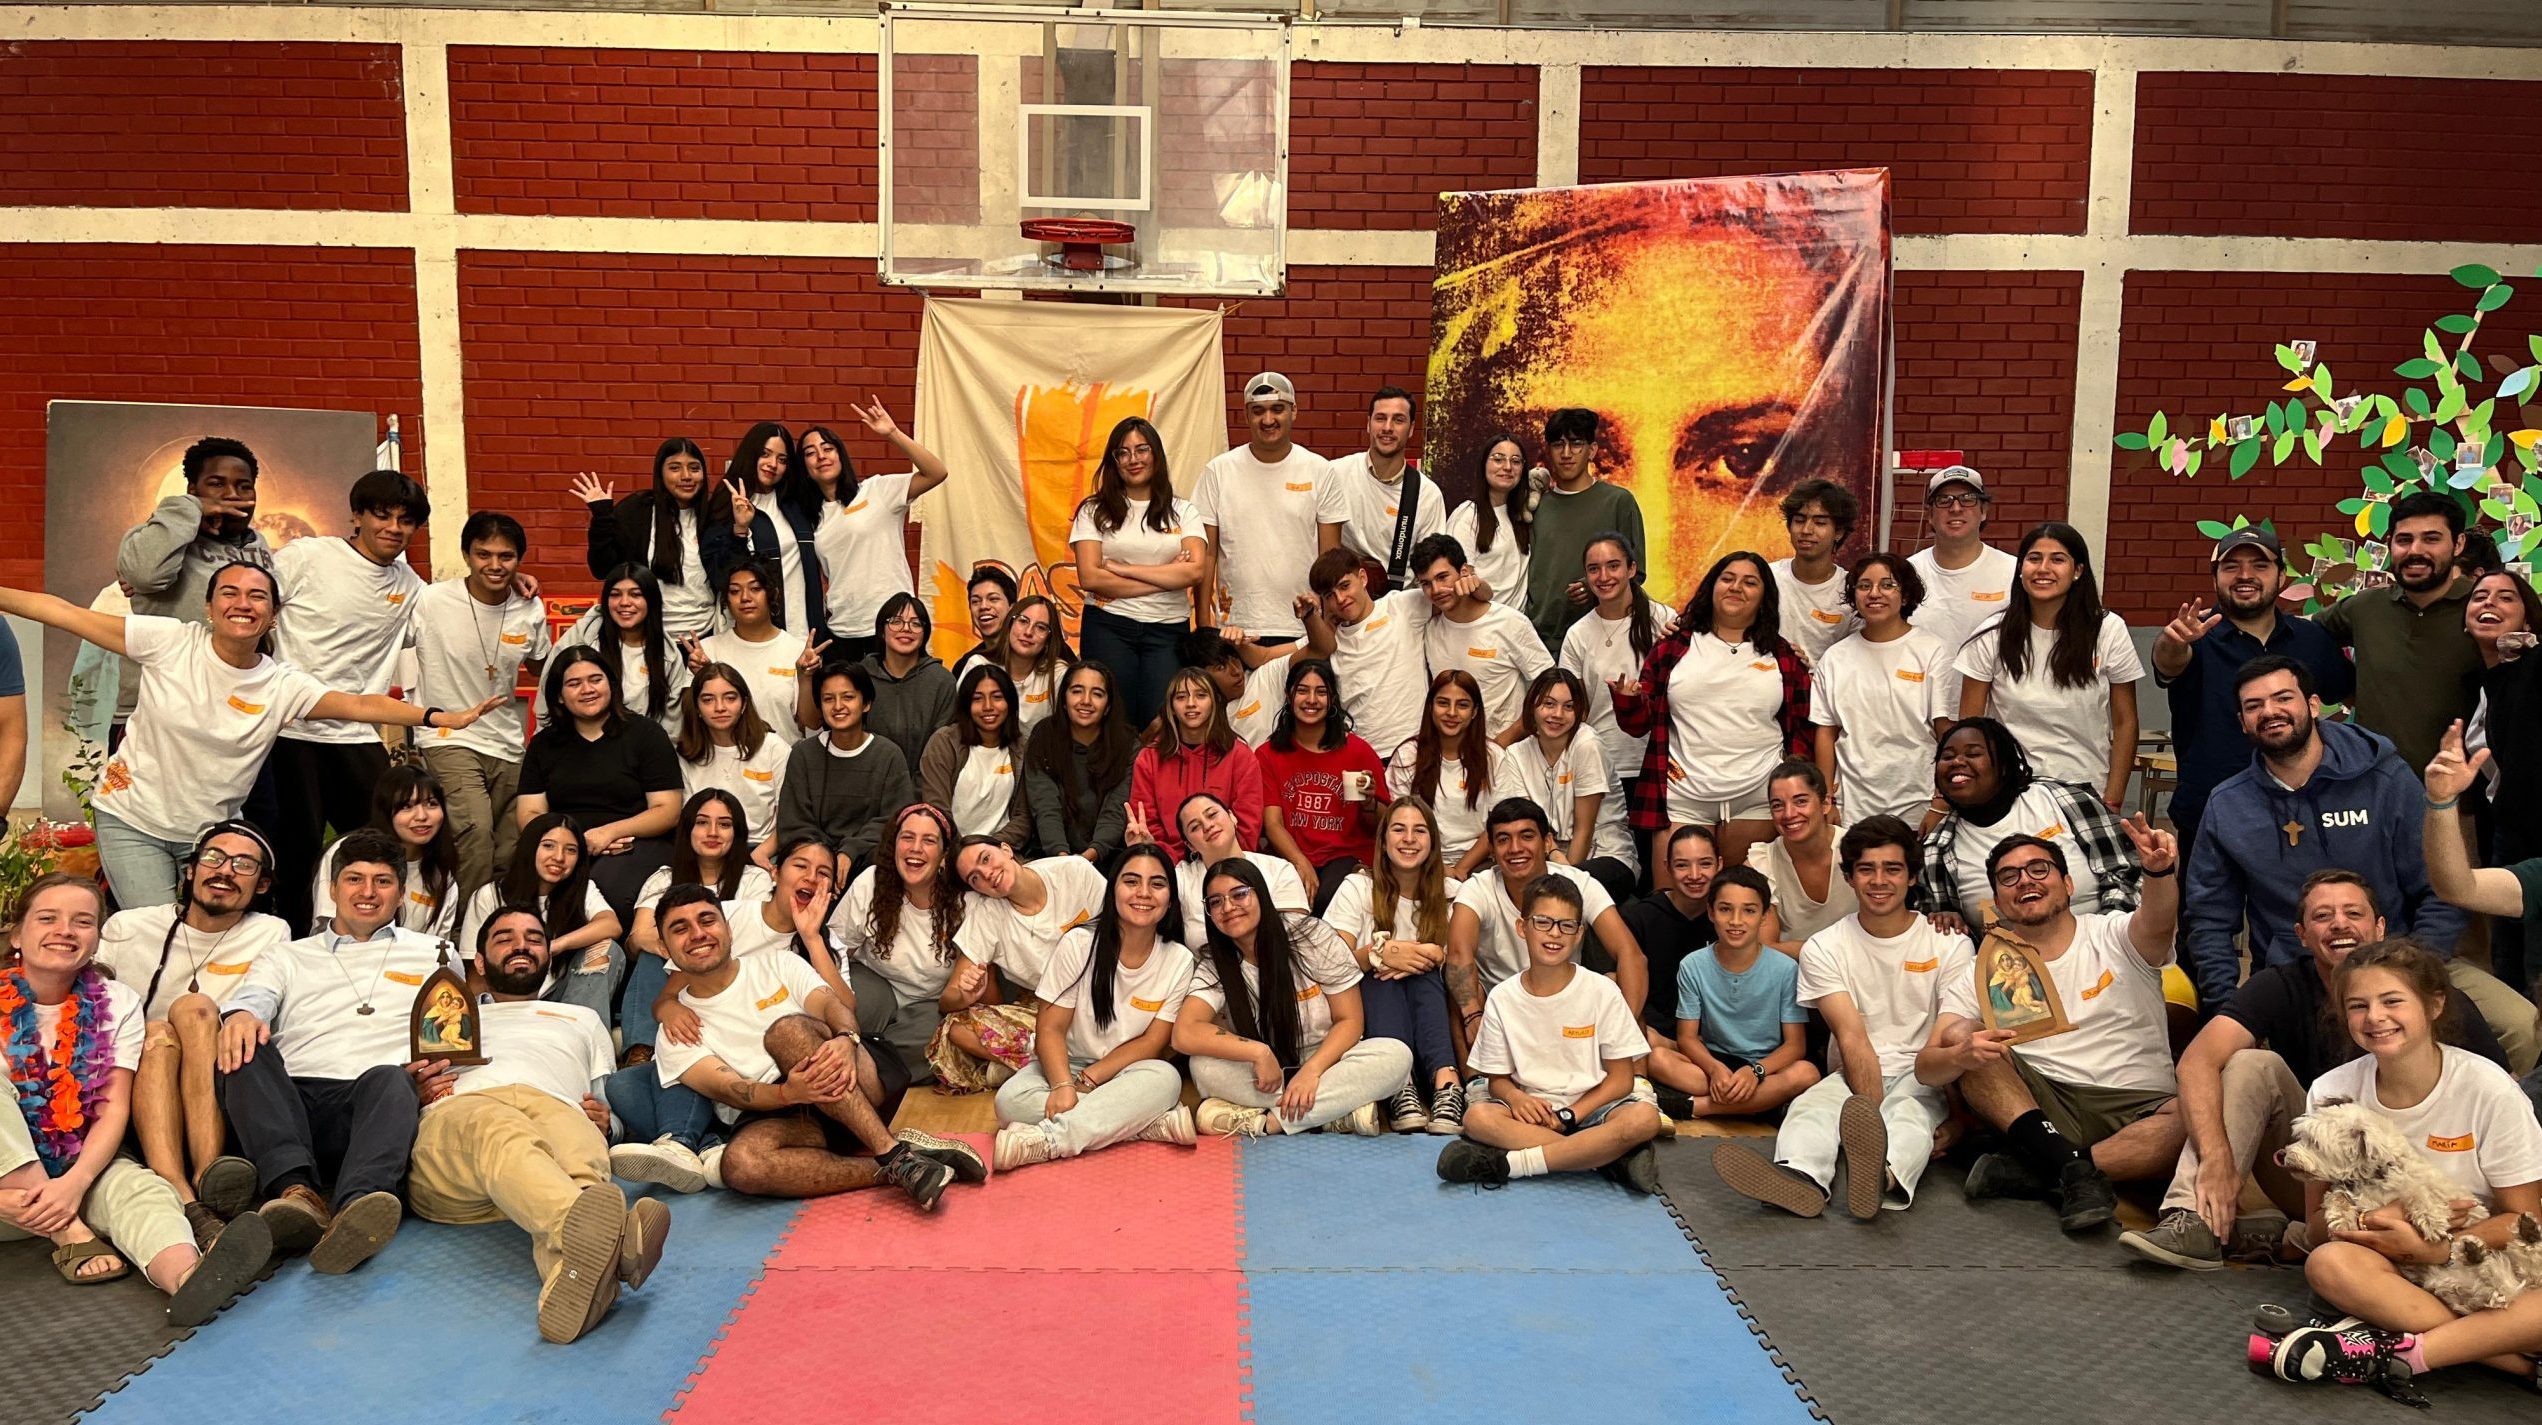 Pascua Joven en Puente Alto, un retiro de Semana Santa iluminado por la música